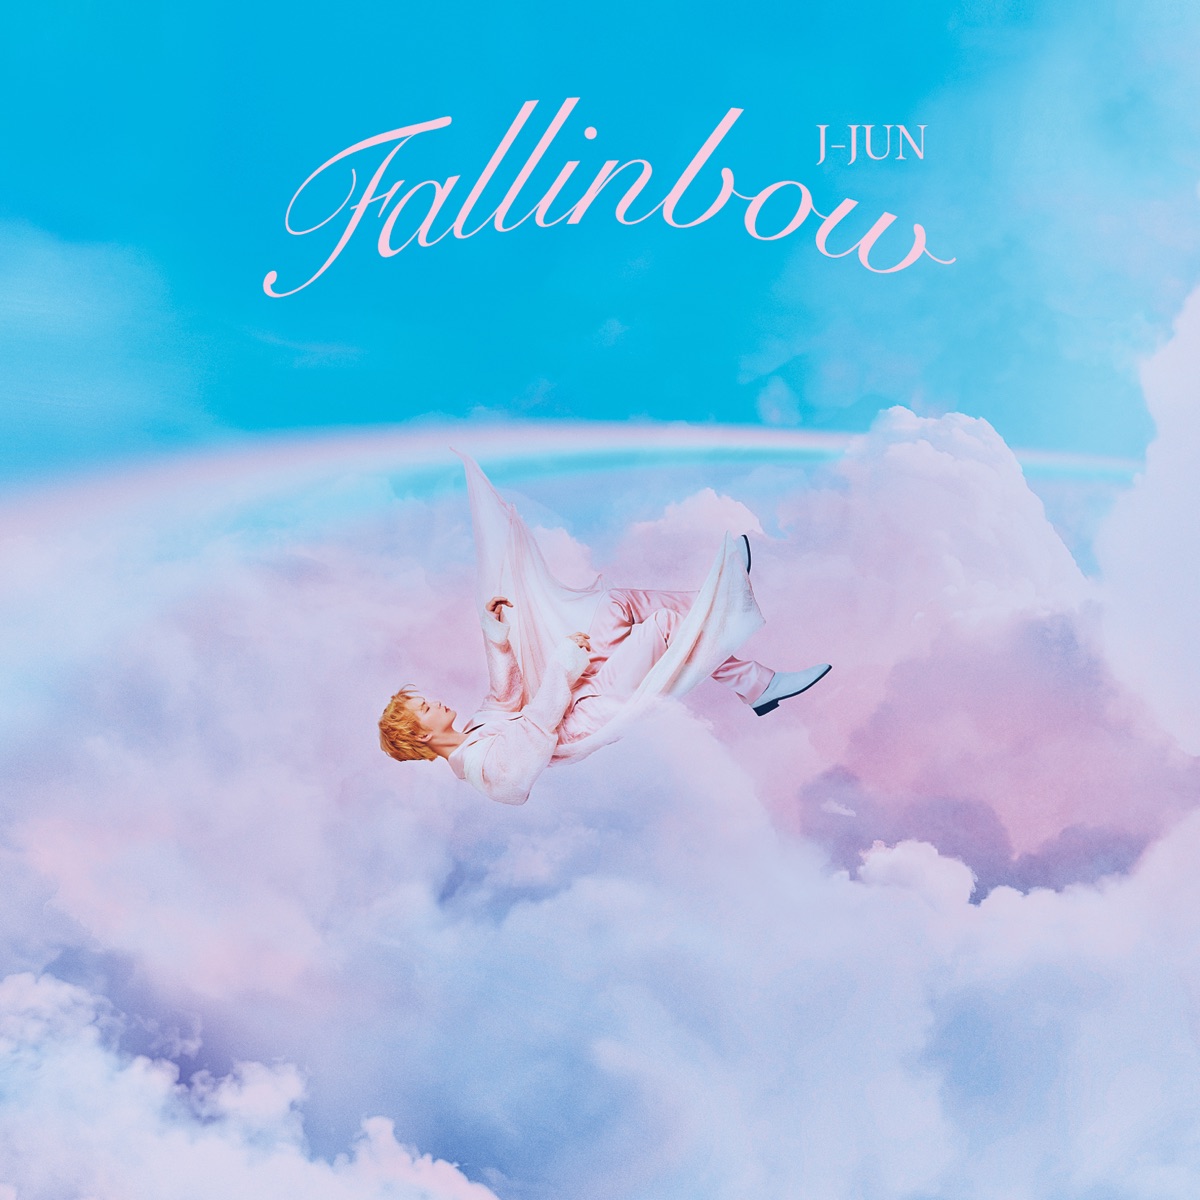 『J-JUN with 中島美嘉 - One Heart』収録の『Fallinbow』ジャケット